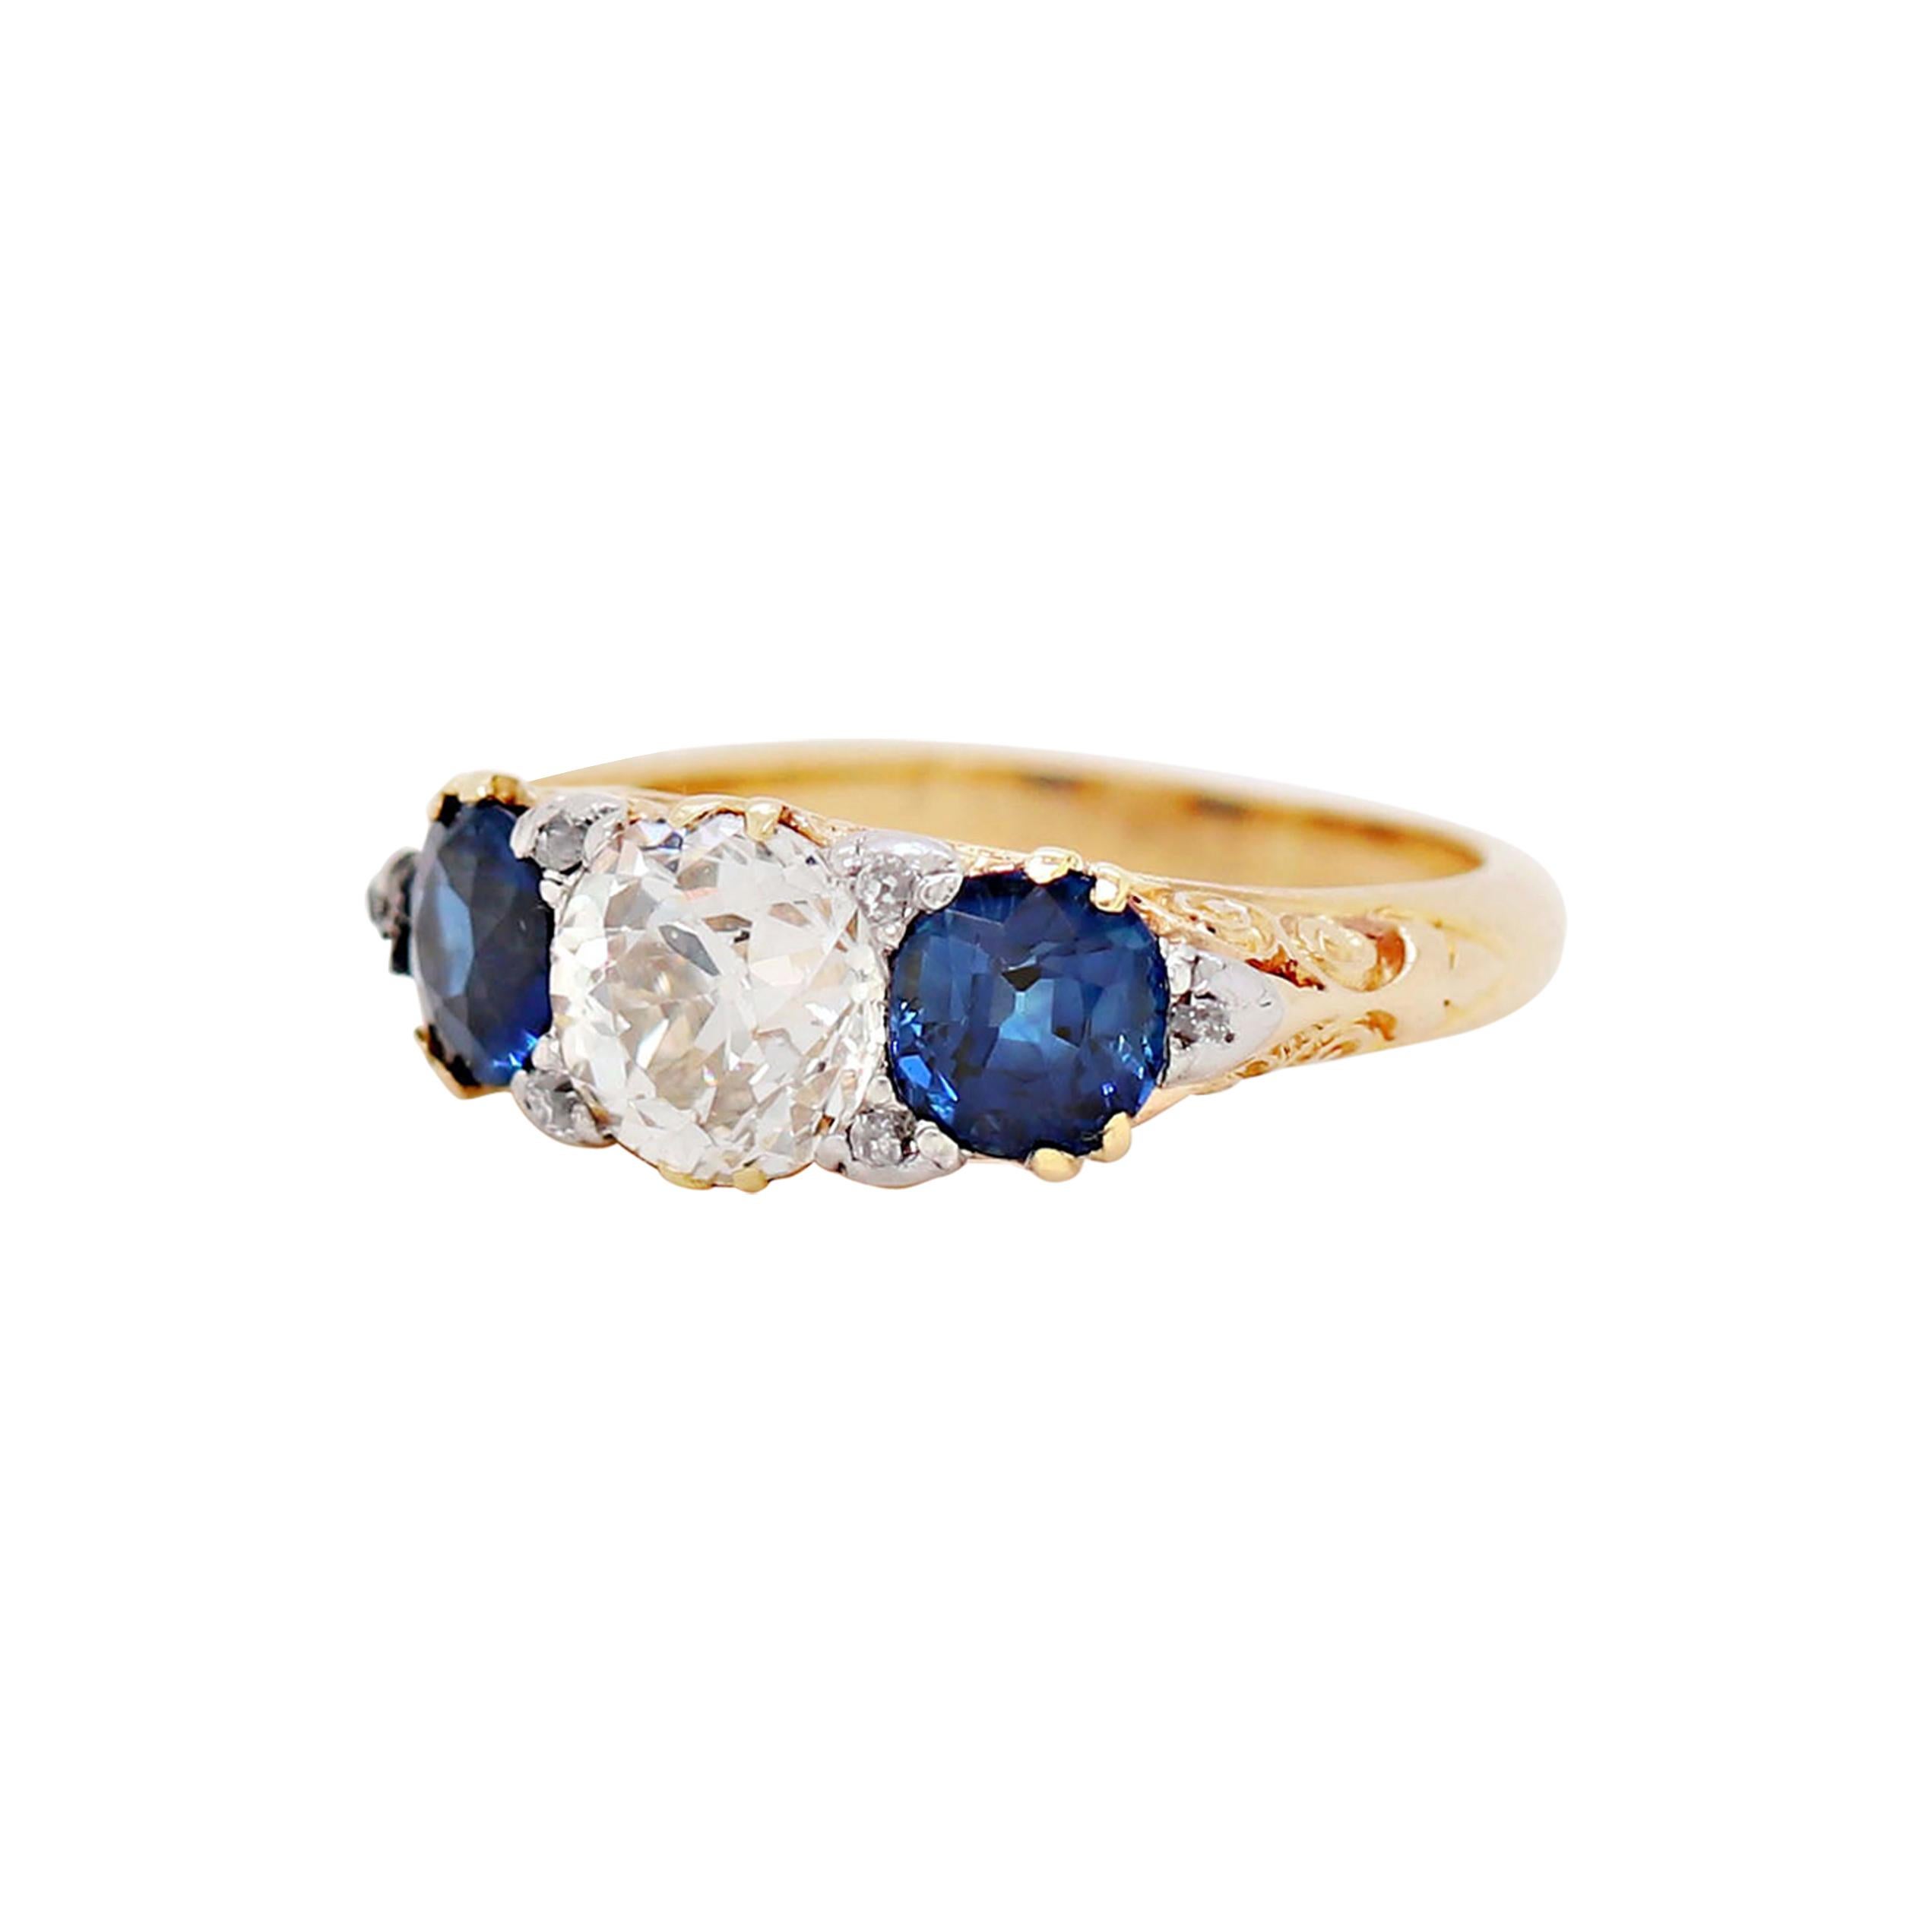 Antique Blue Sapphire and Old Cut Diamond Three-Stone 18ct Gold Ring, circa 1890